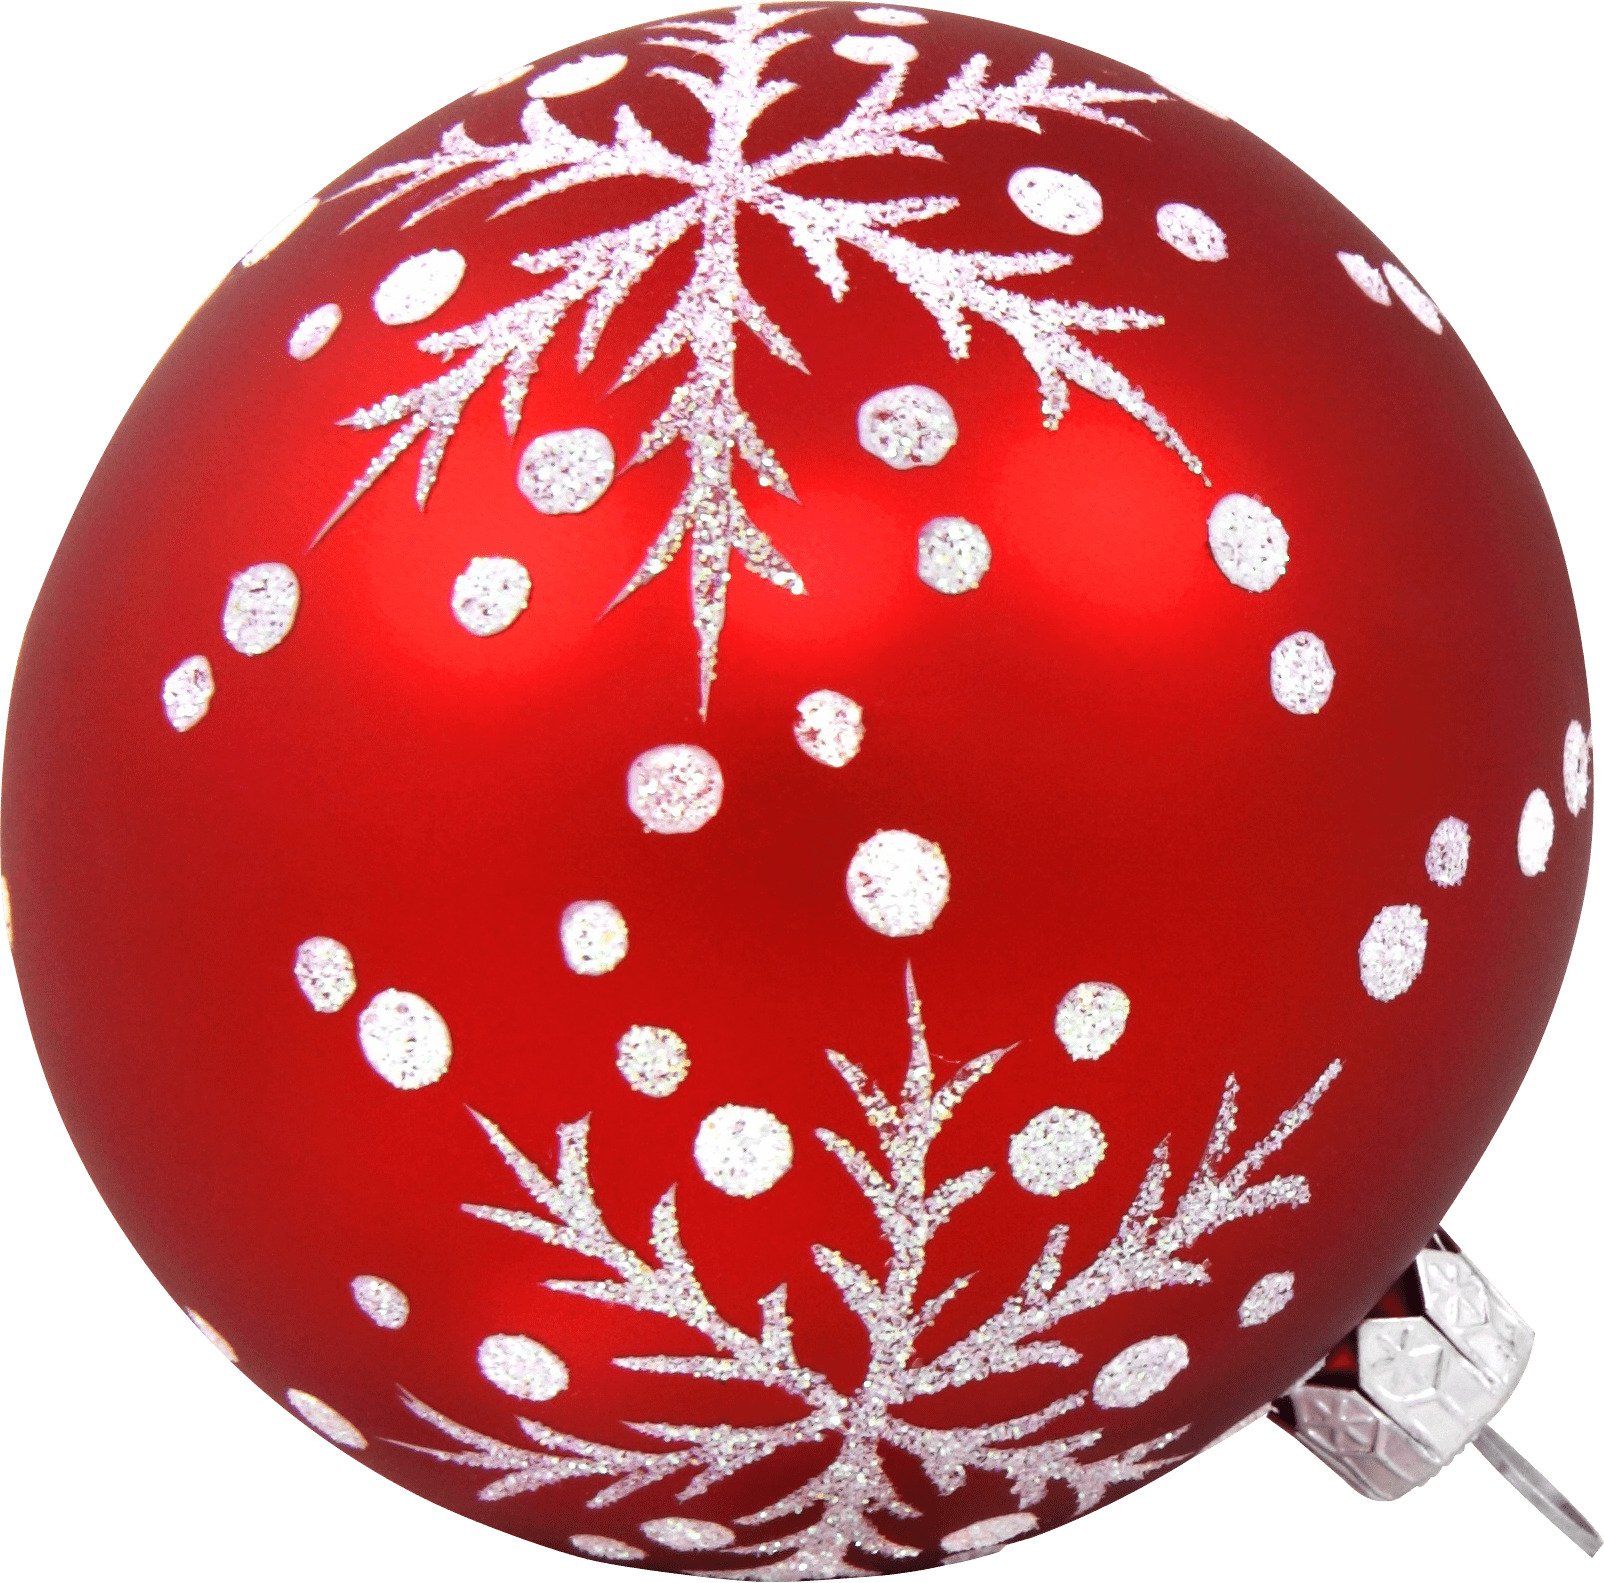 Large Christmas Red Ball icons